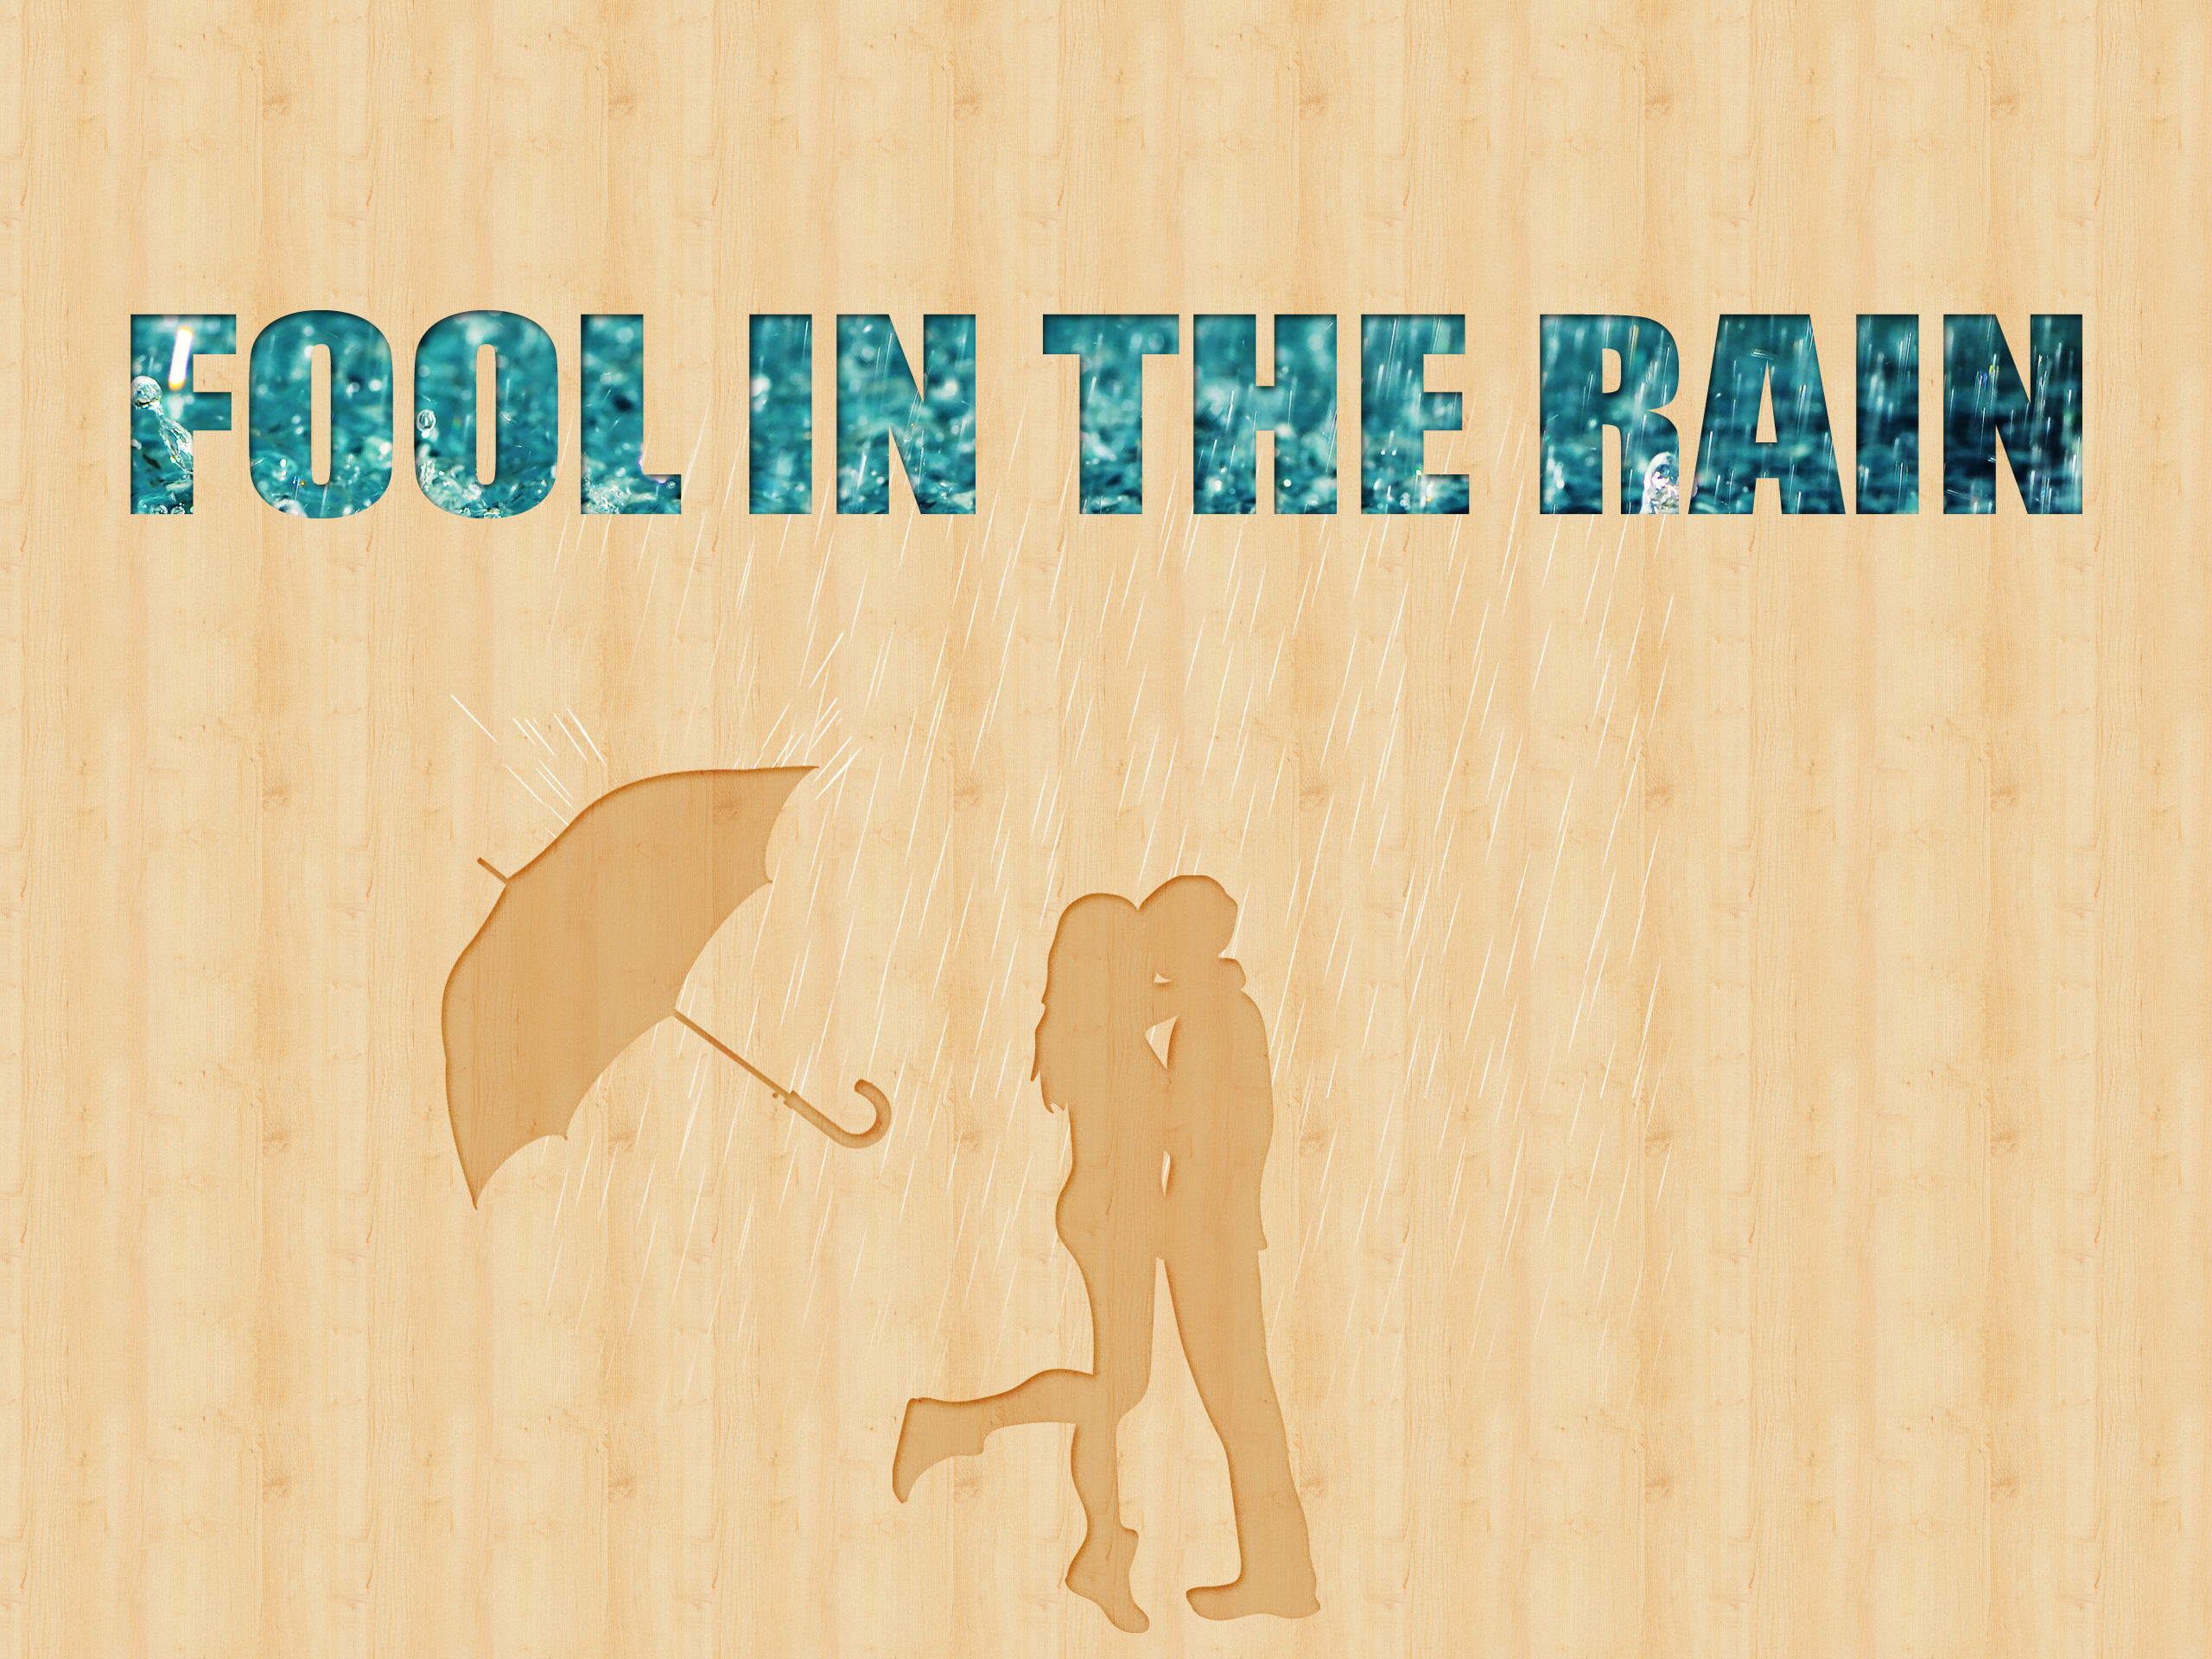 General 2560x1920 rain umbrella Led Zeppelin simple background digital art